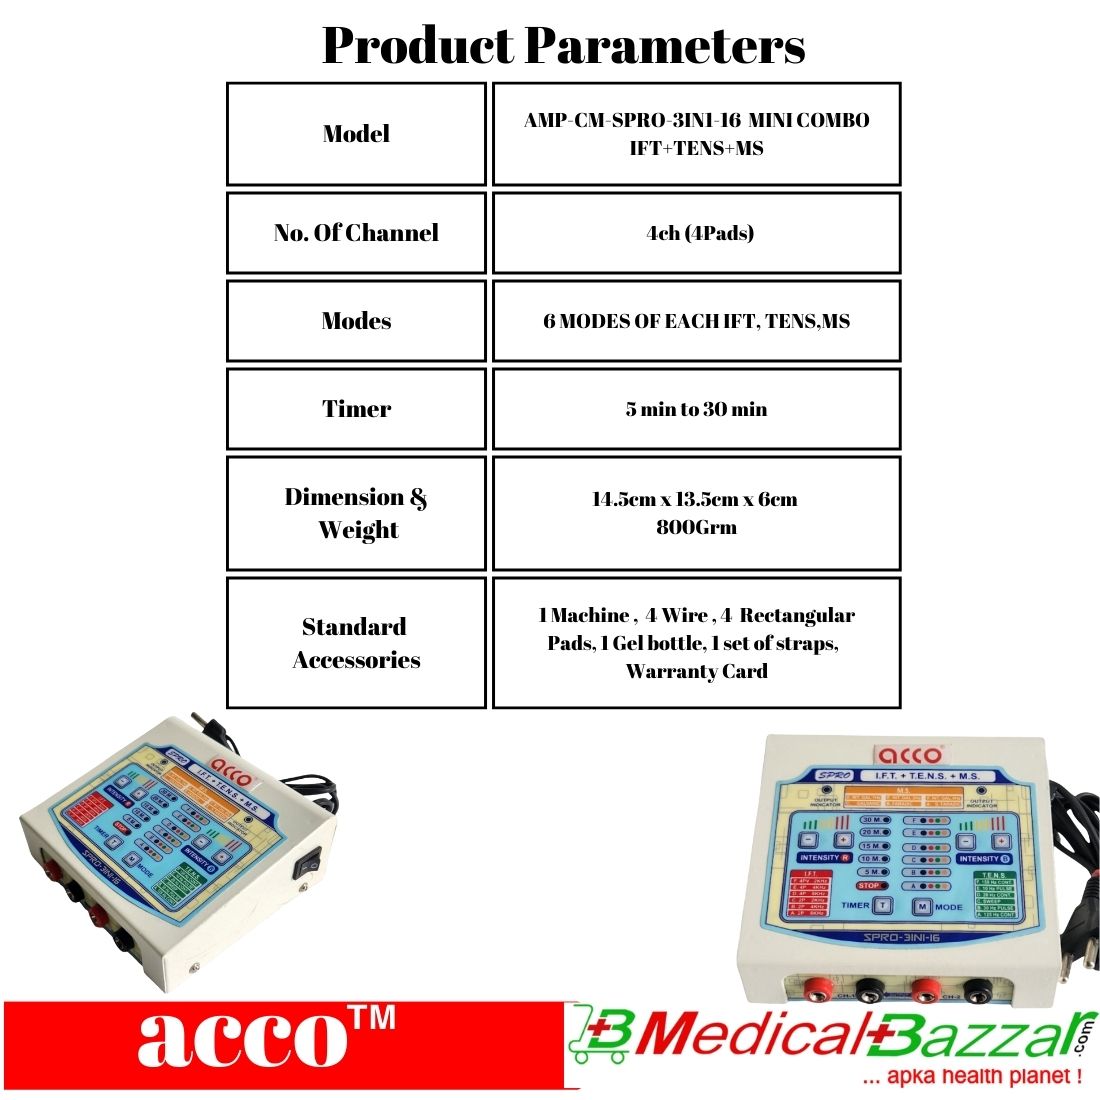 acco Mini Tens Machine 2ch – MedicalBazzar